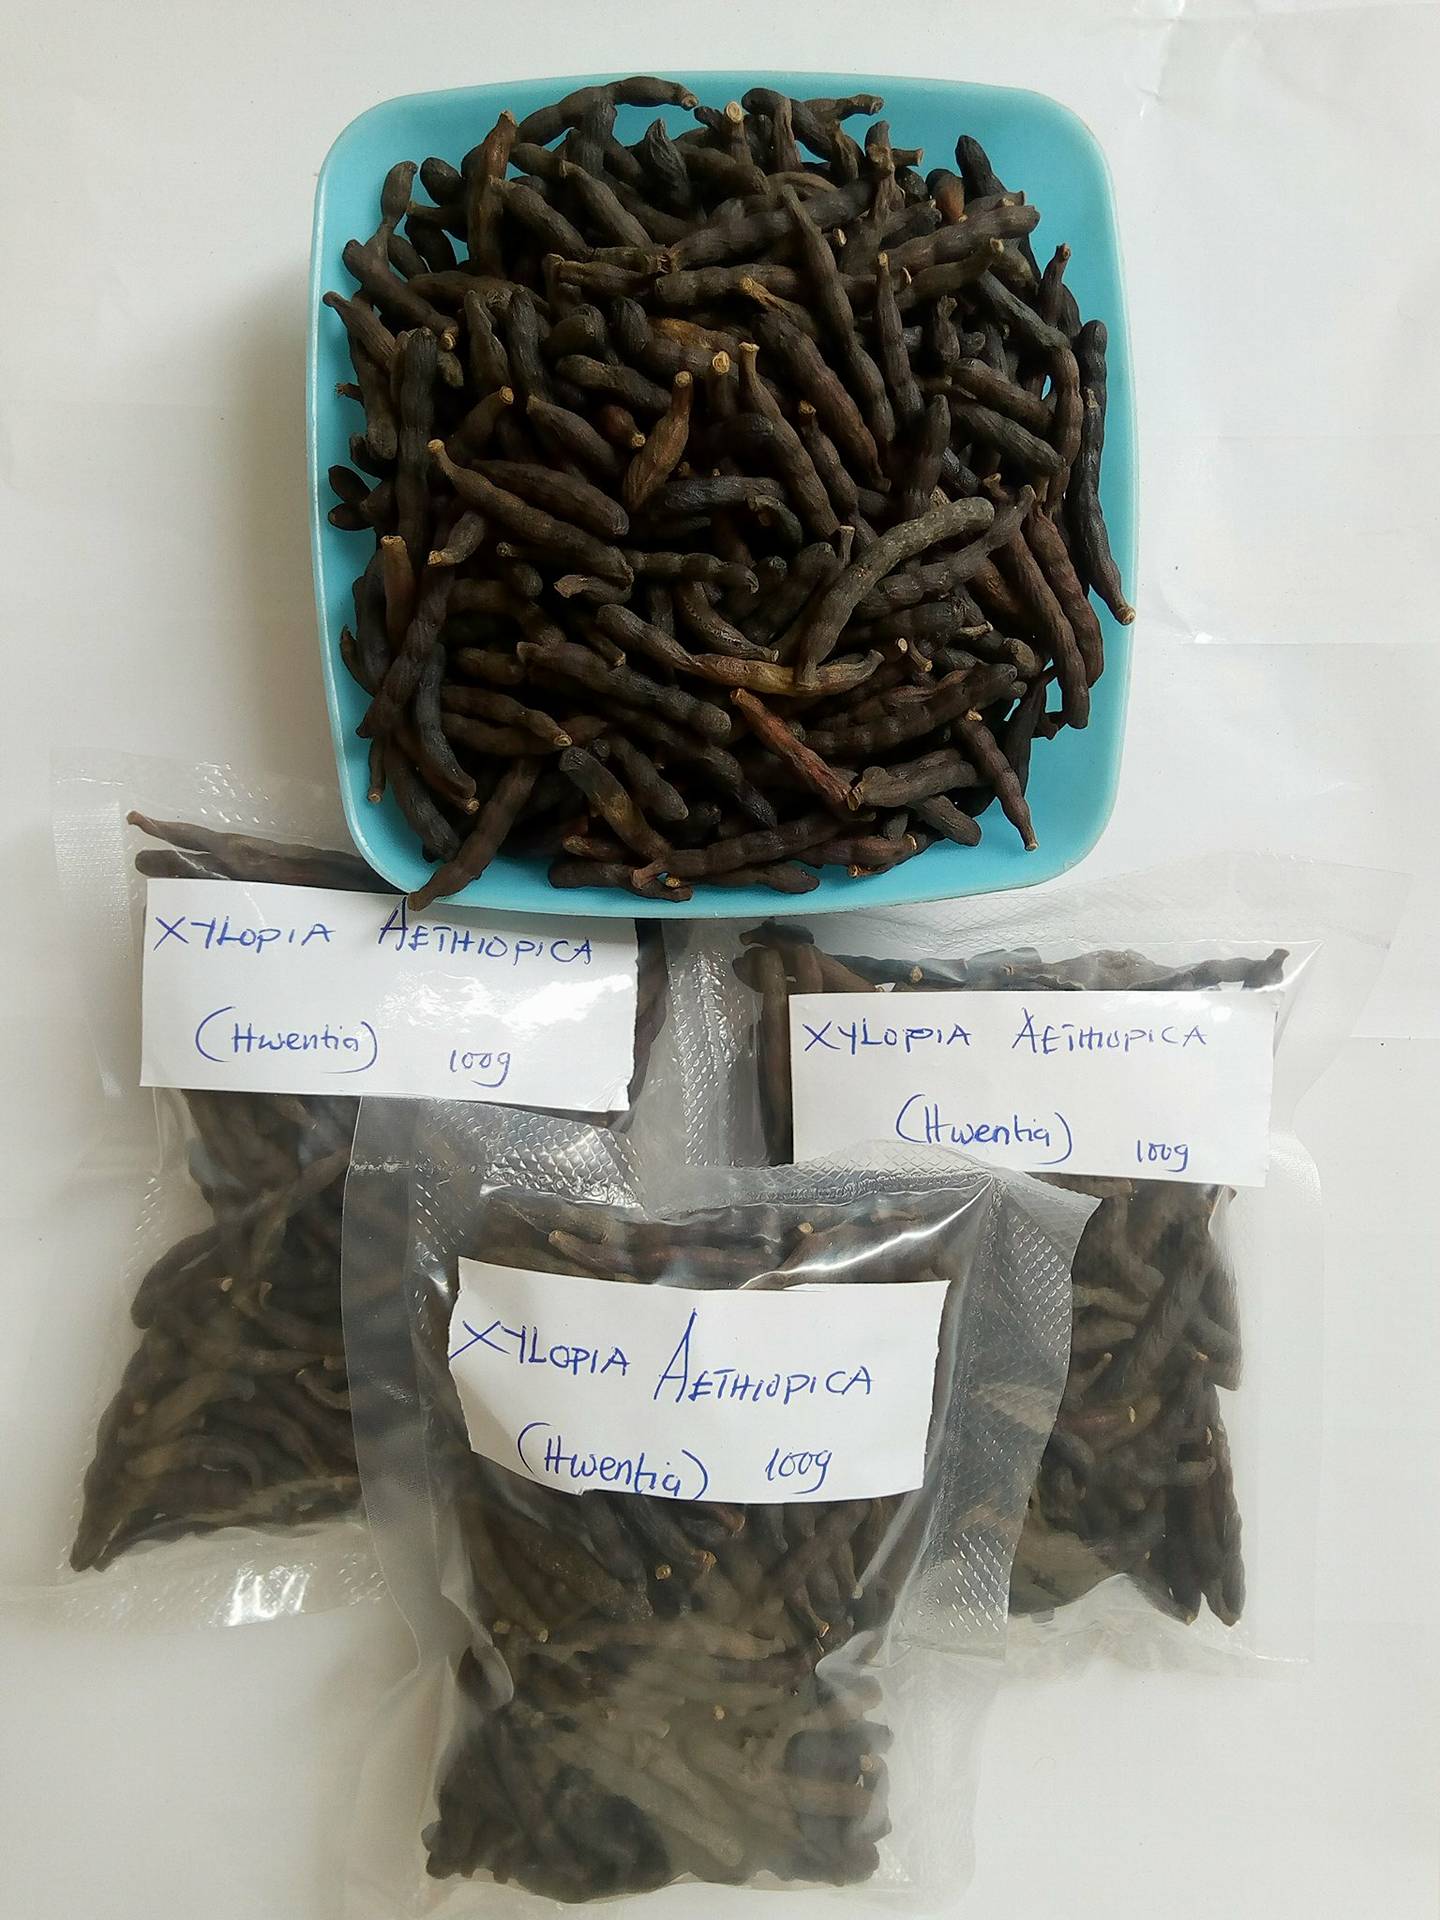 Hwenteaa Xylopia aethiopica UDA Hwentia Ethiopian pepper - Bulk African Trade 